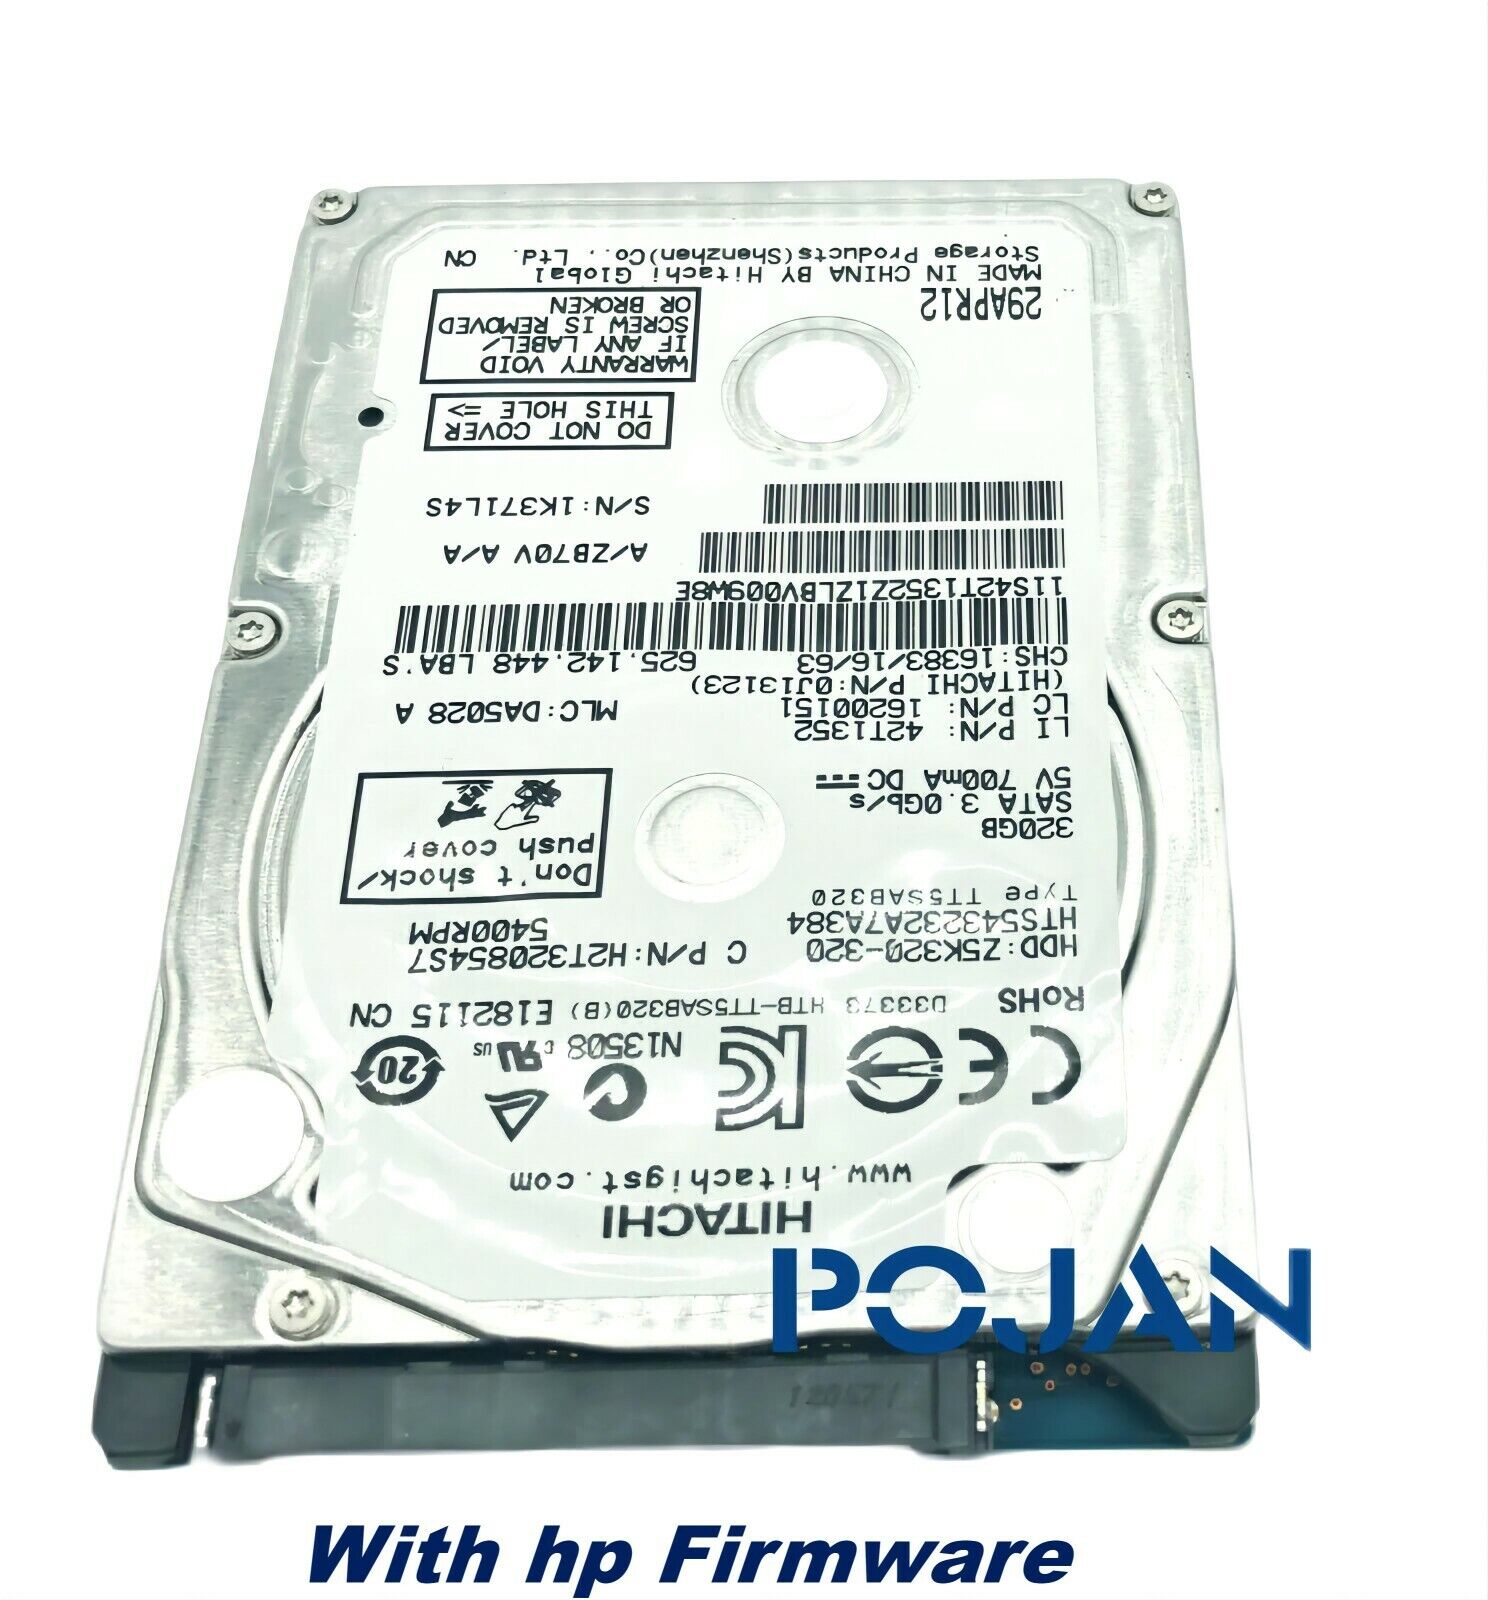 1x 320G SATA Hard Disk Drive Fit for HP Designjet Z3100 SATA HDD Of Formatter